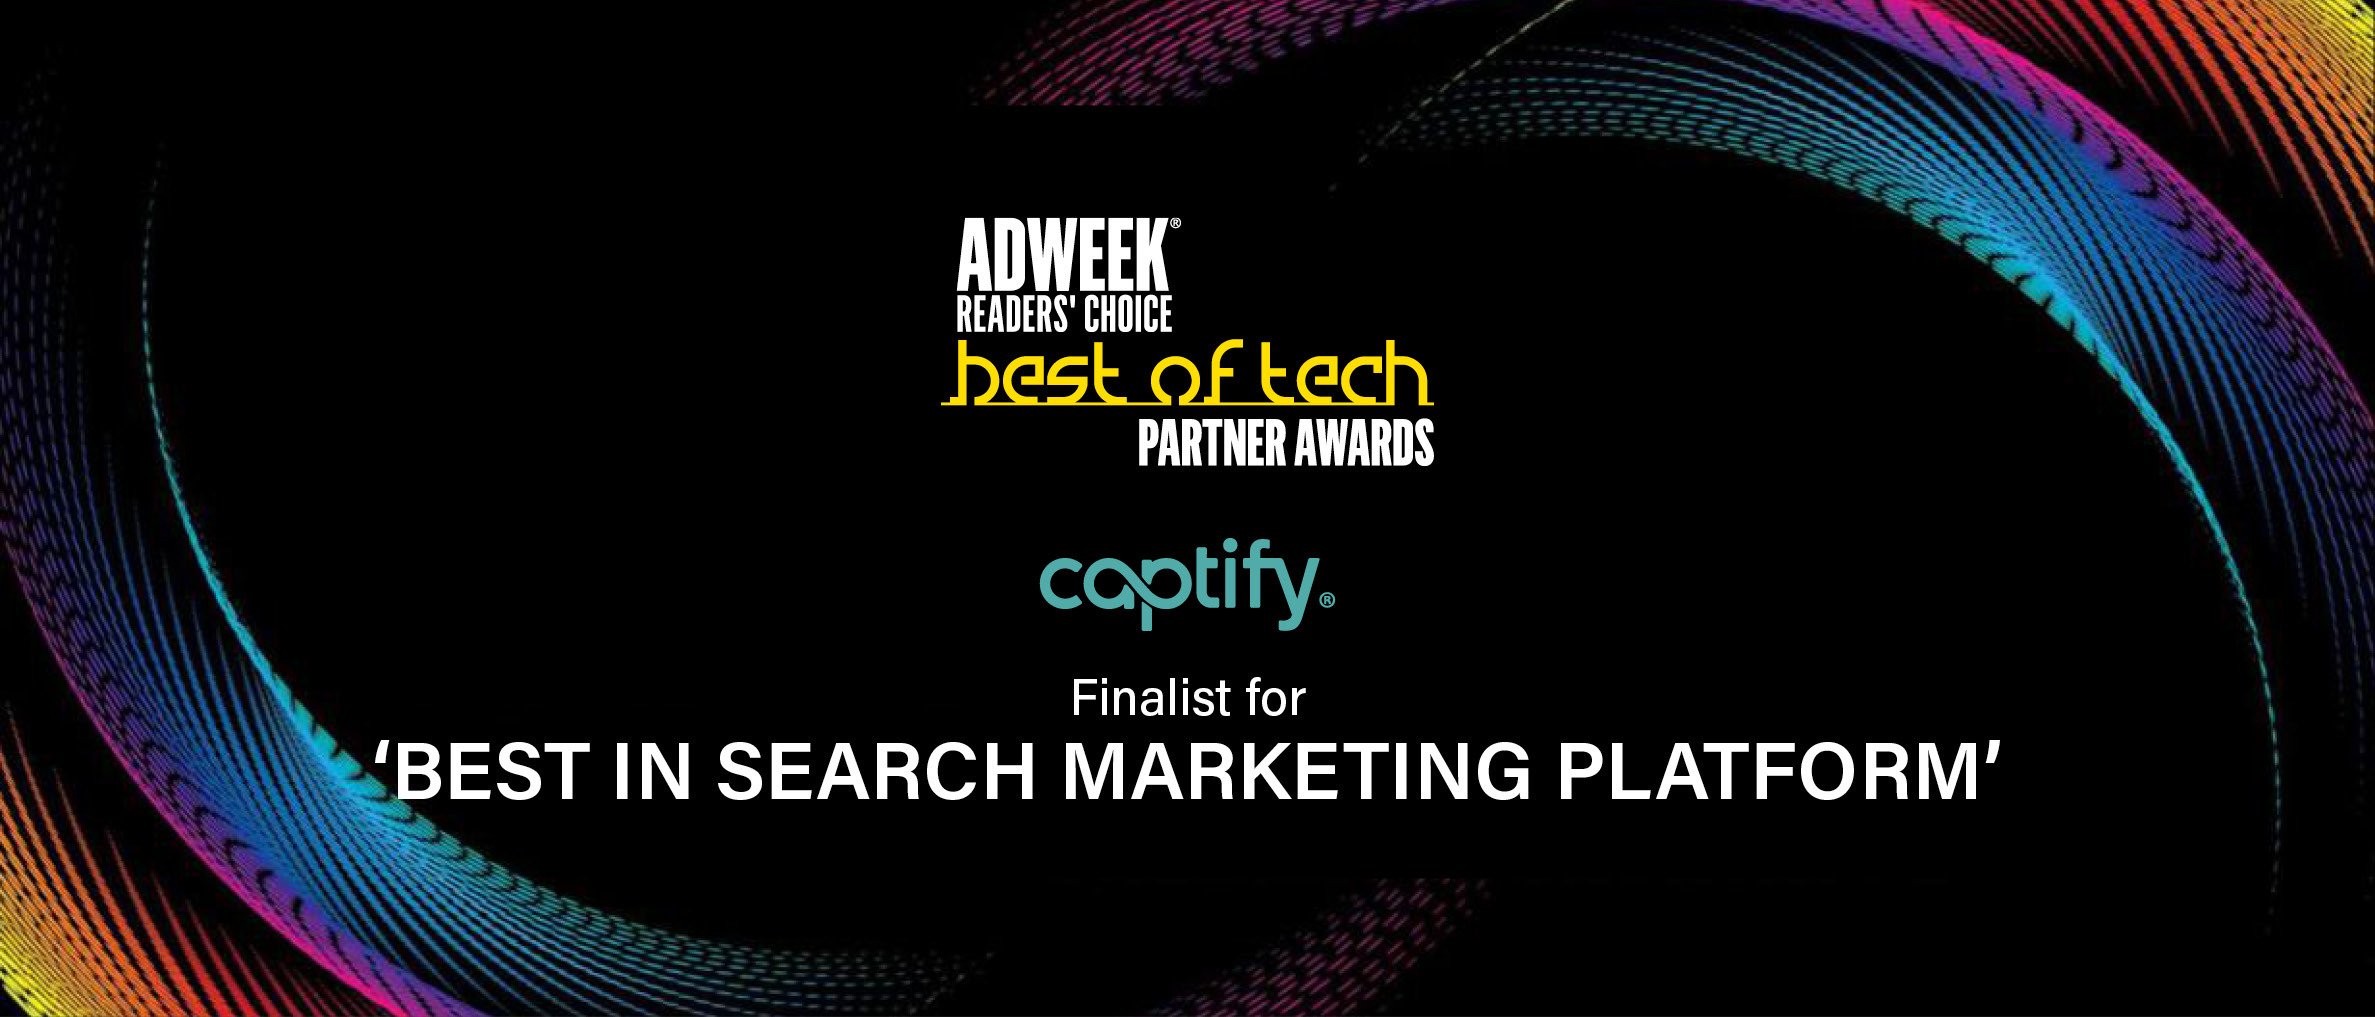 Captify’s Sense Platform Is A Finalist For Adweek’s Best Of Tech Partner Awards